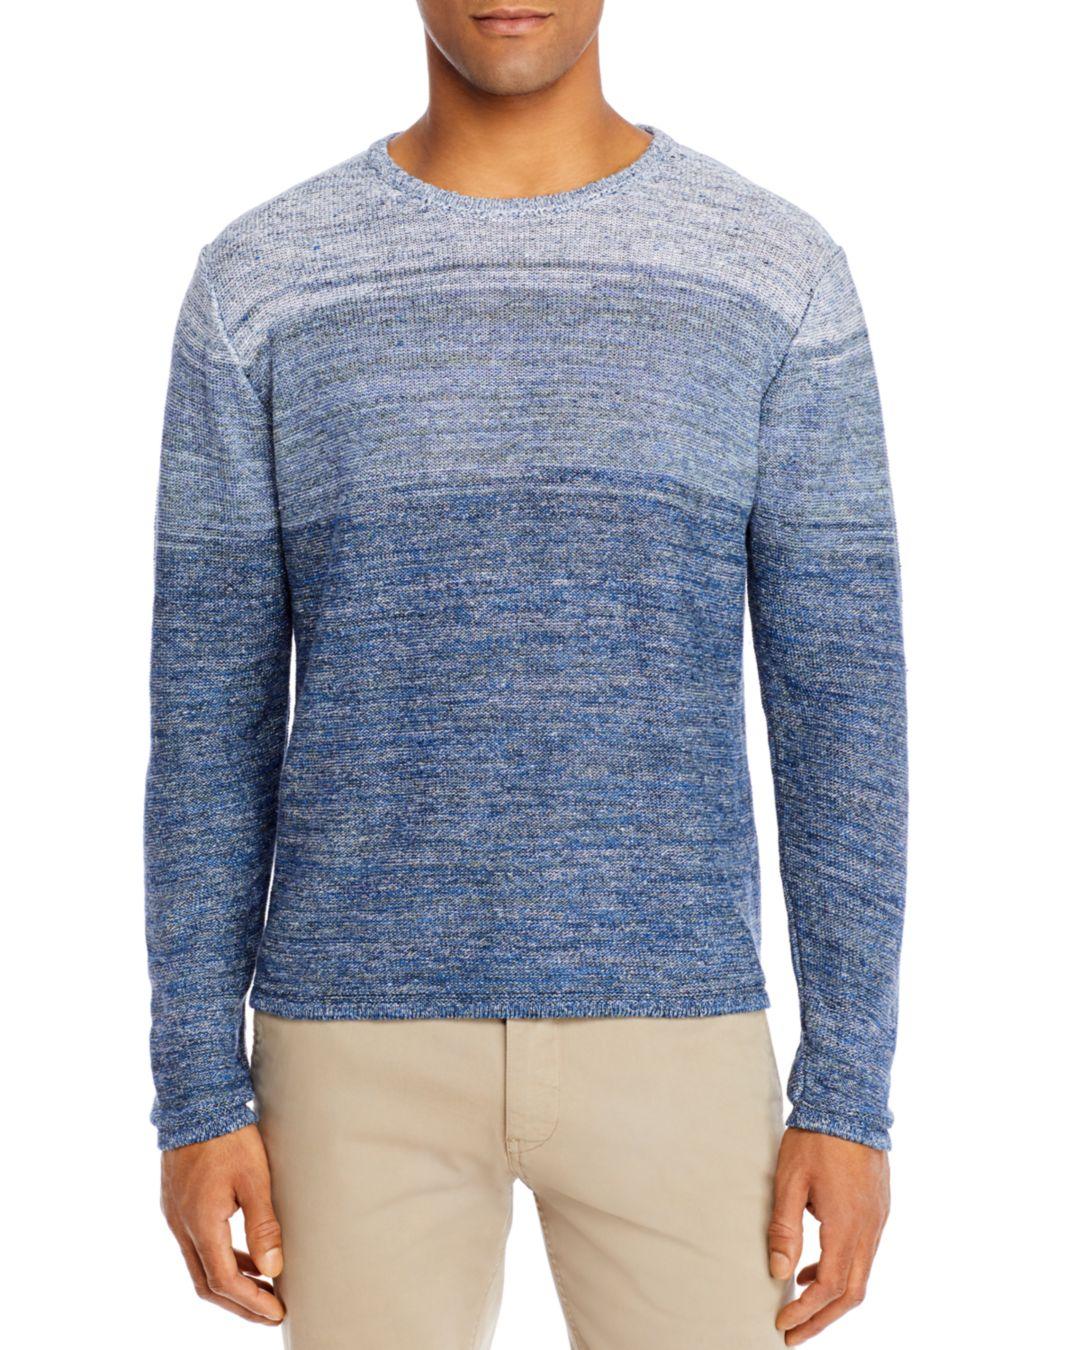 Inis Meáin Linen Ombré Stripe Sweater in Light Blue (Blue) for Men - Lyst